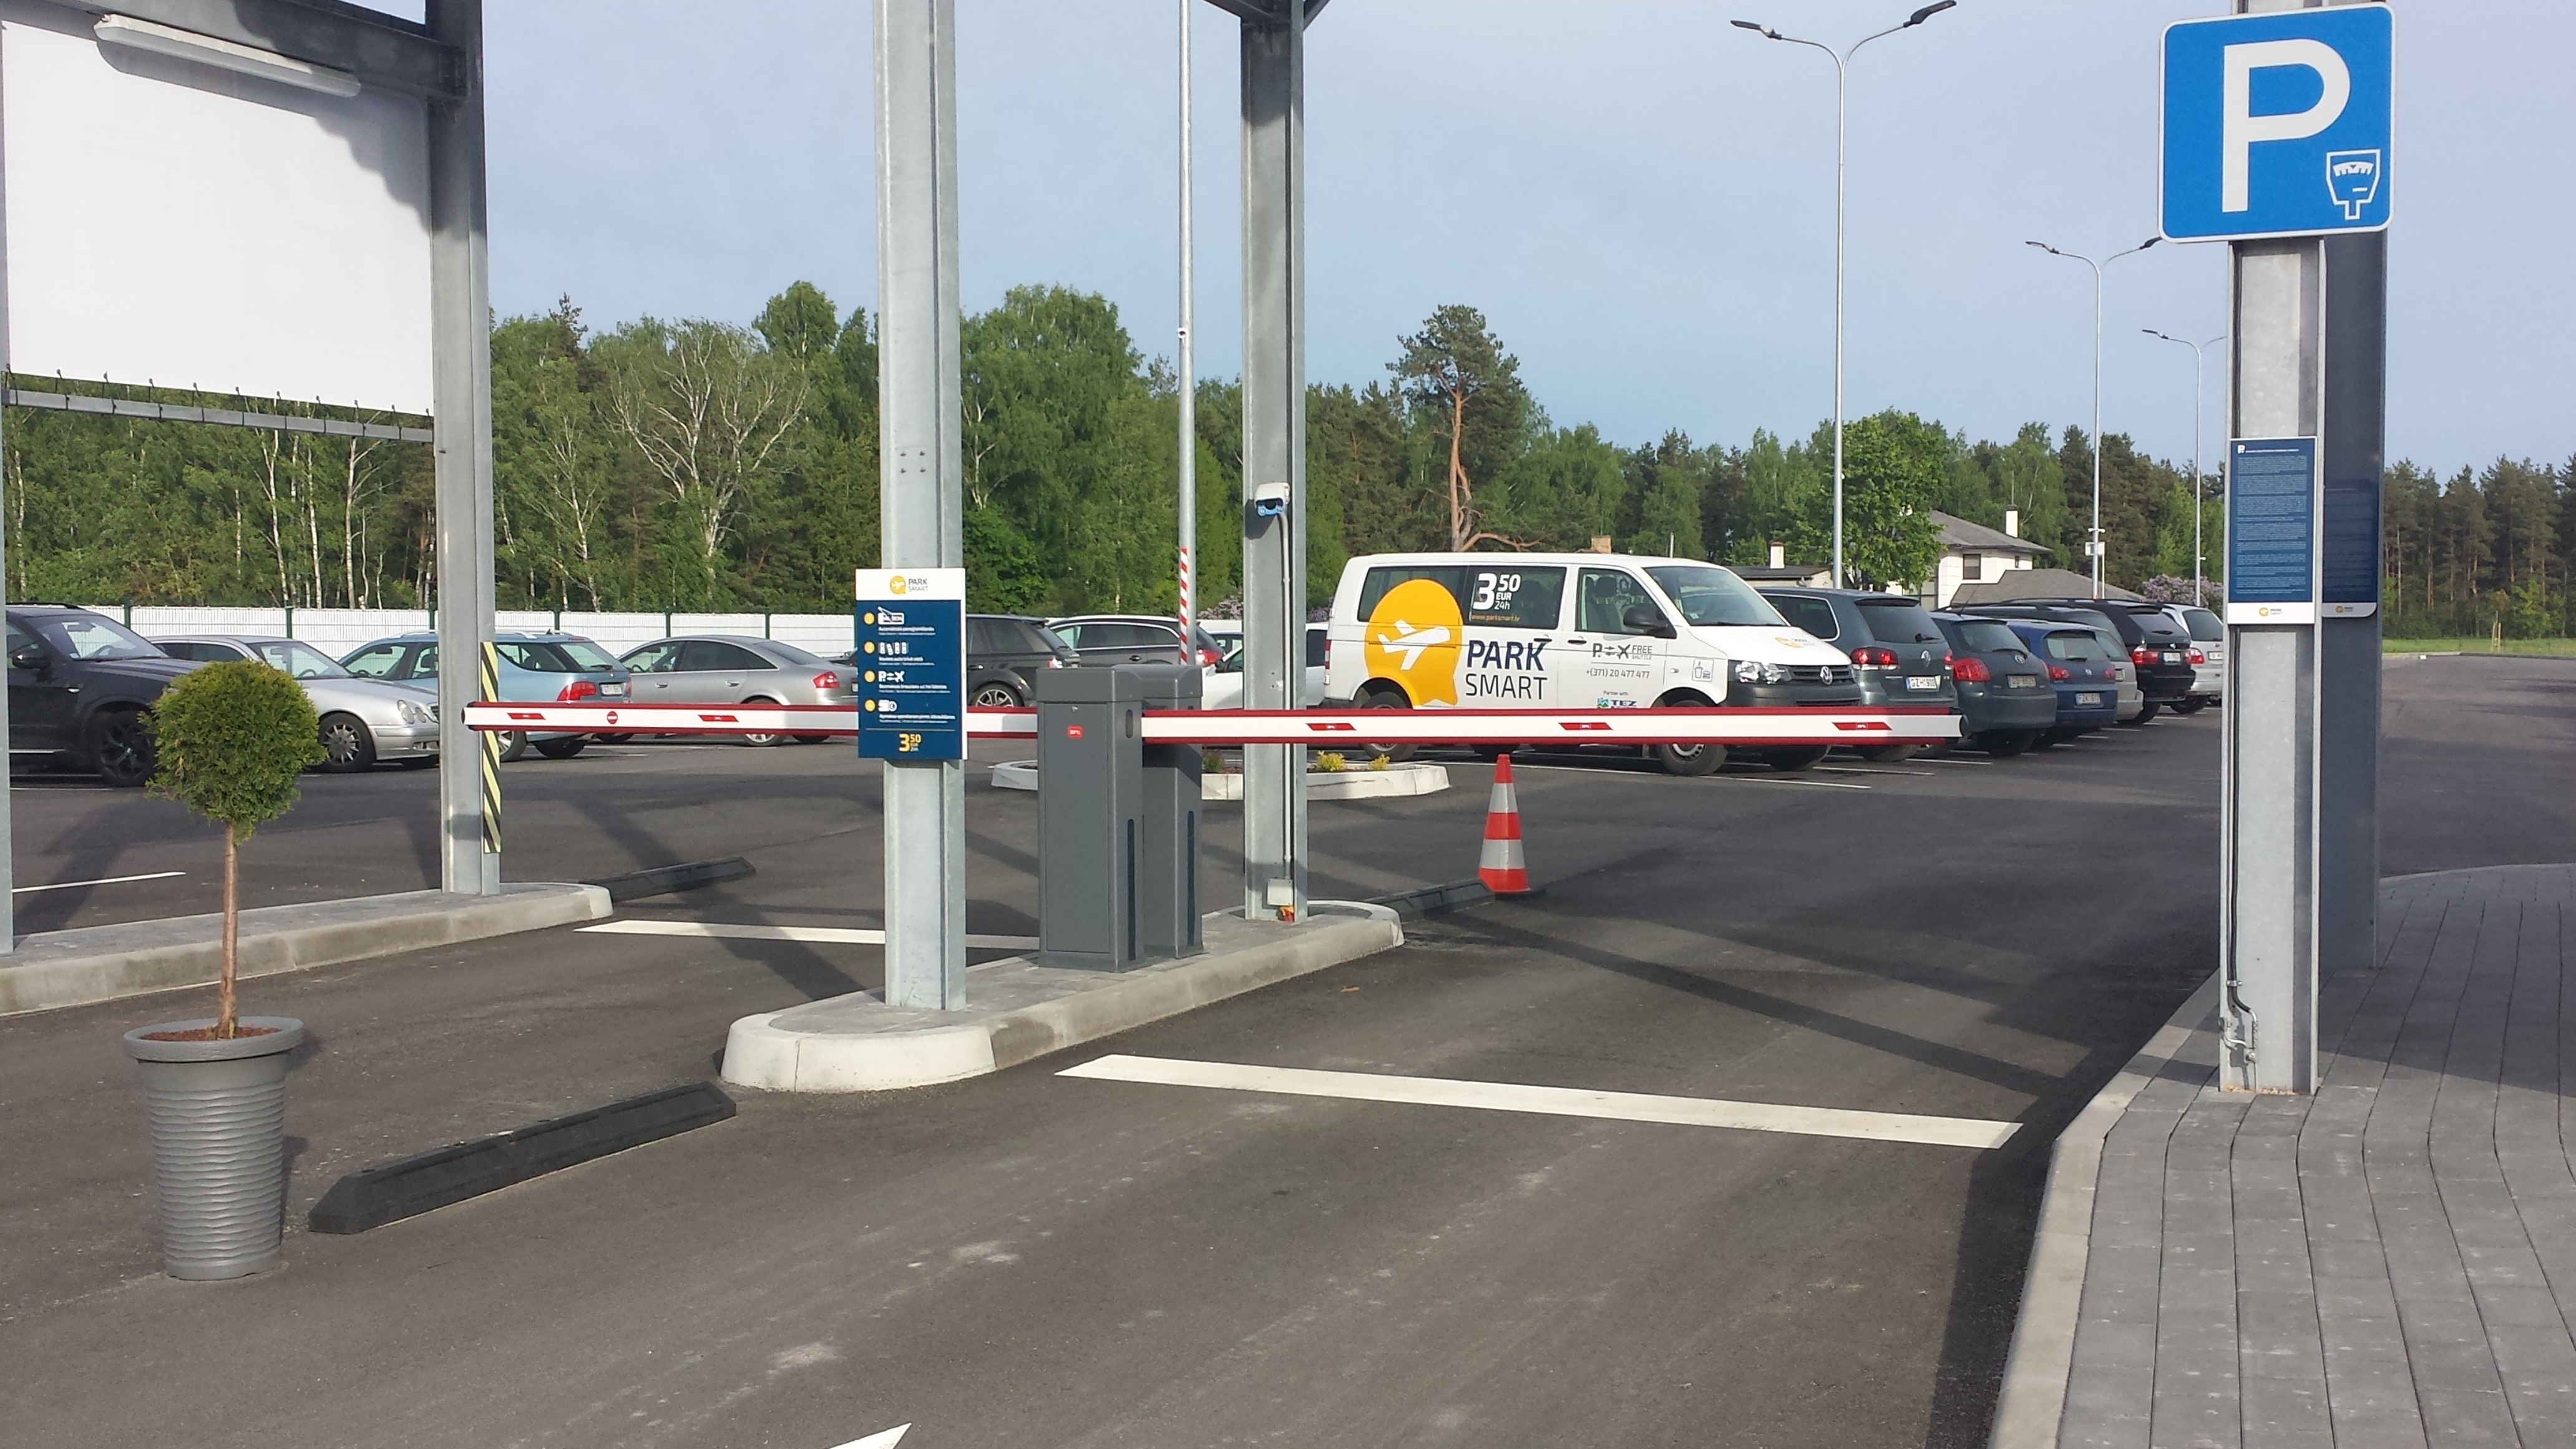 Park Smart Riga airport parking 